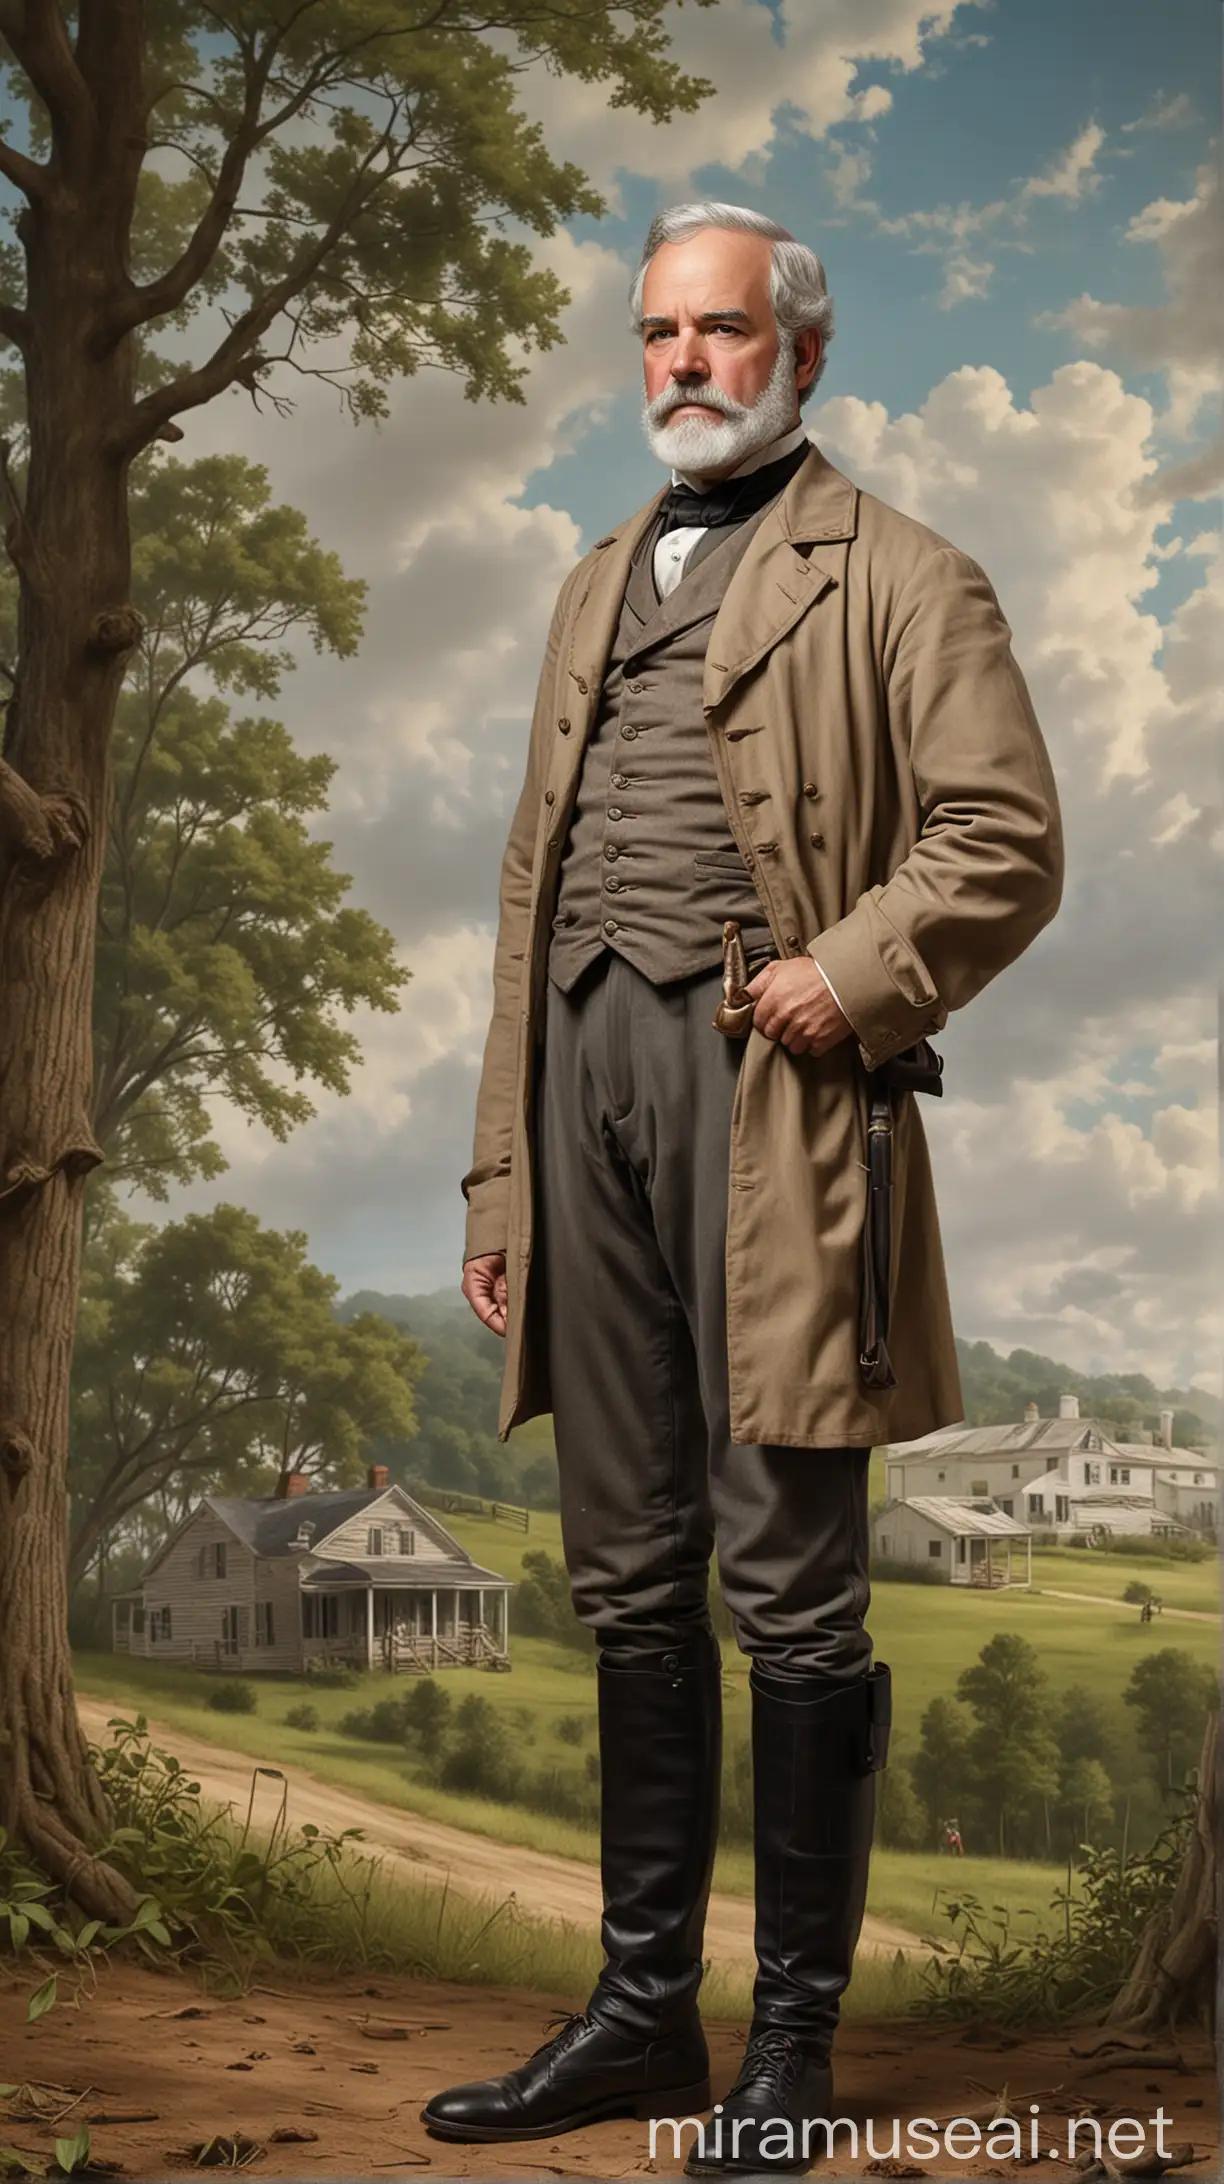 Young Robert E Lee in 19thCentury Virginia Landscape